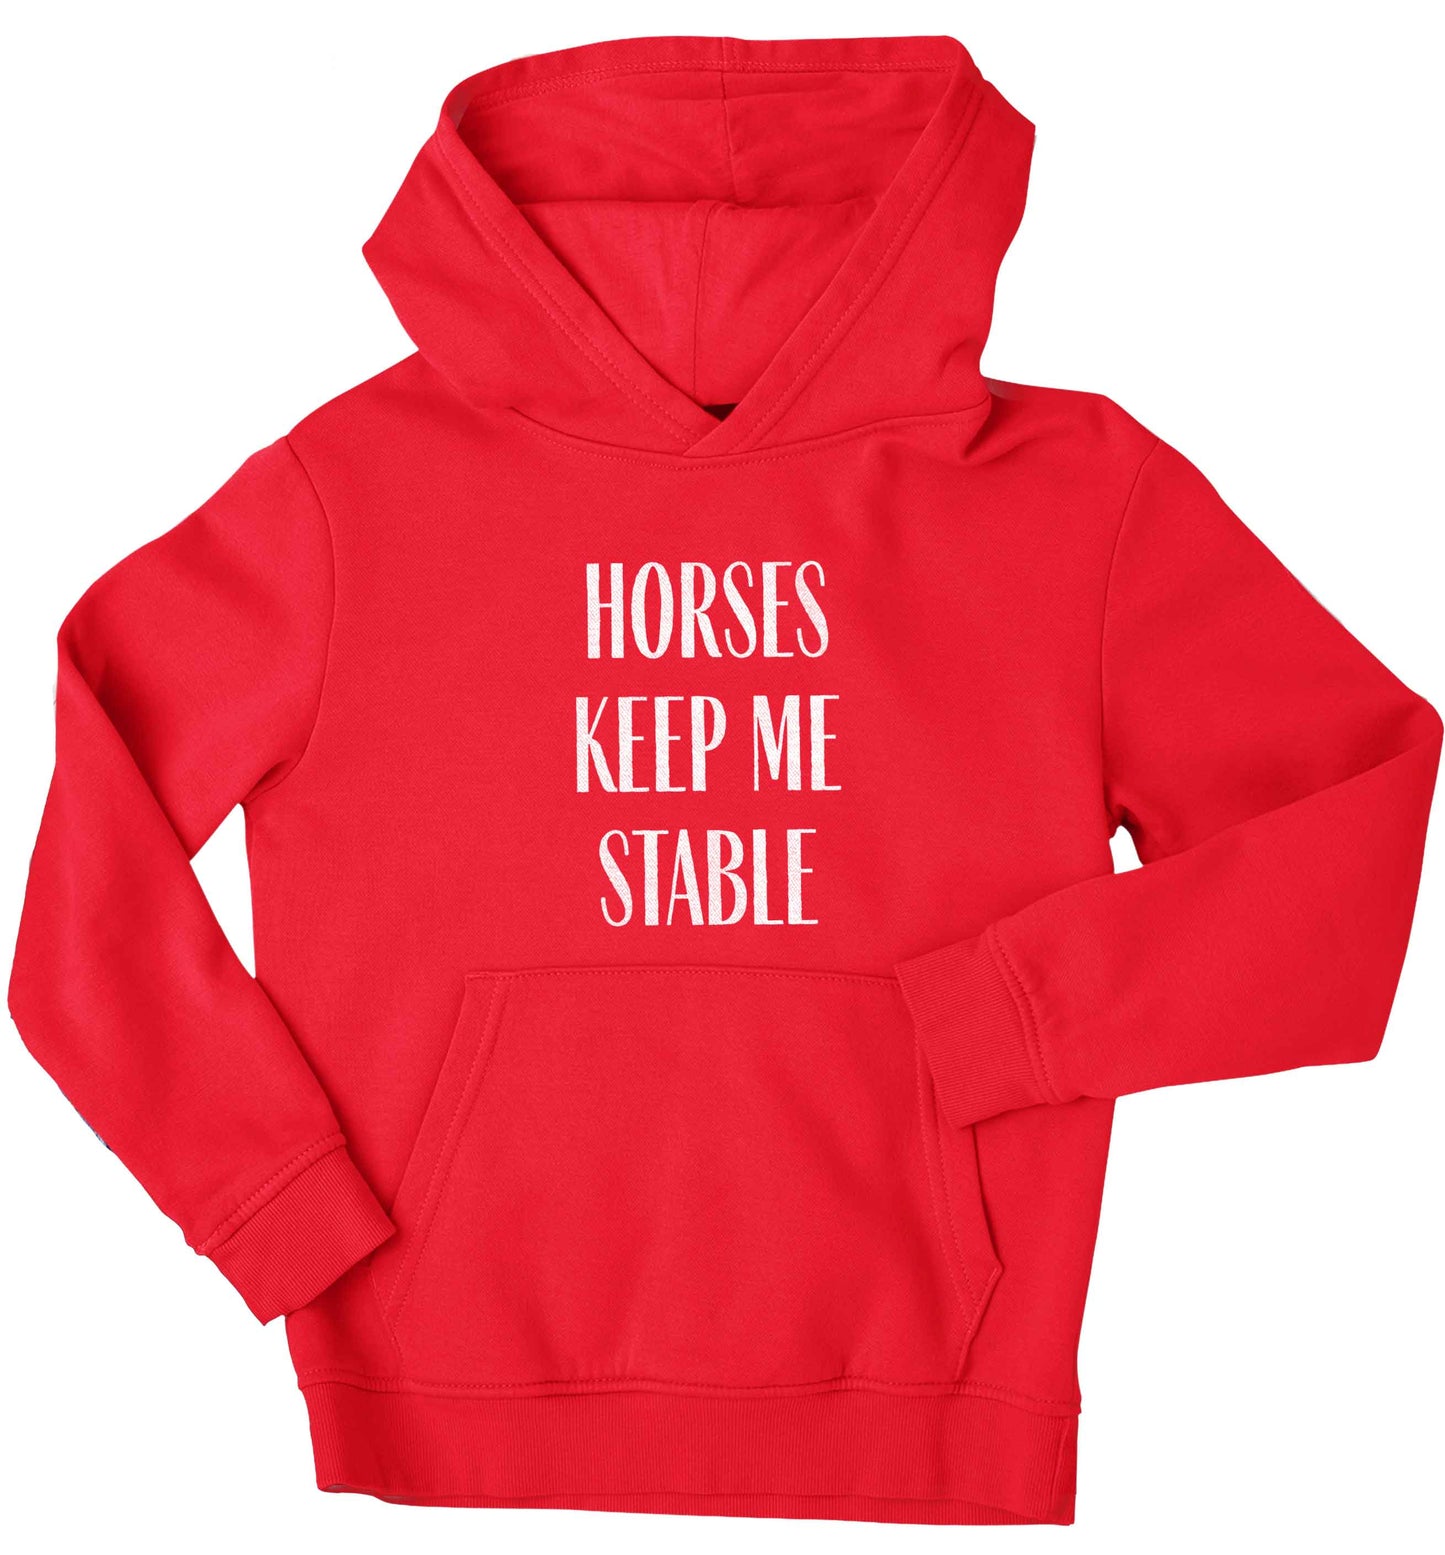 Horses keep me stable children's red hoodie 12-13 Years